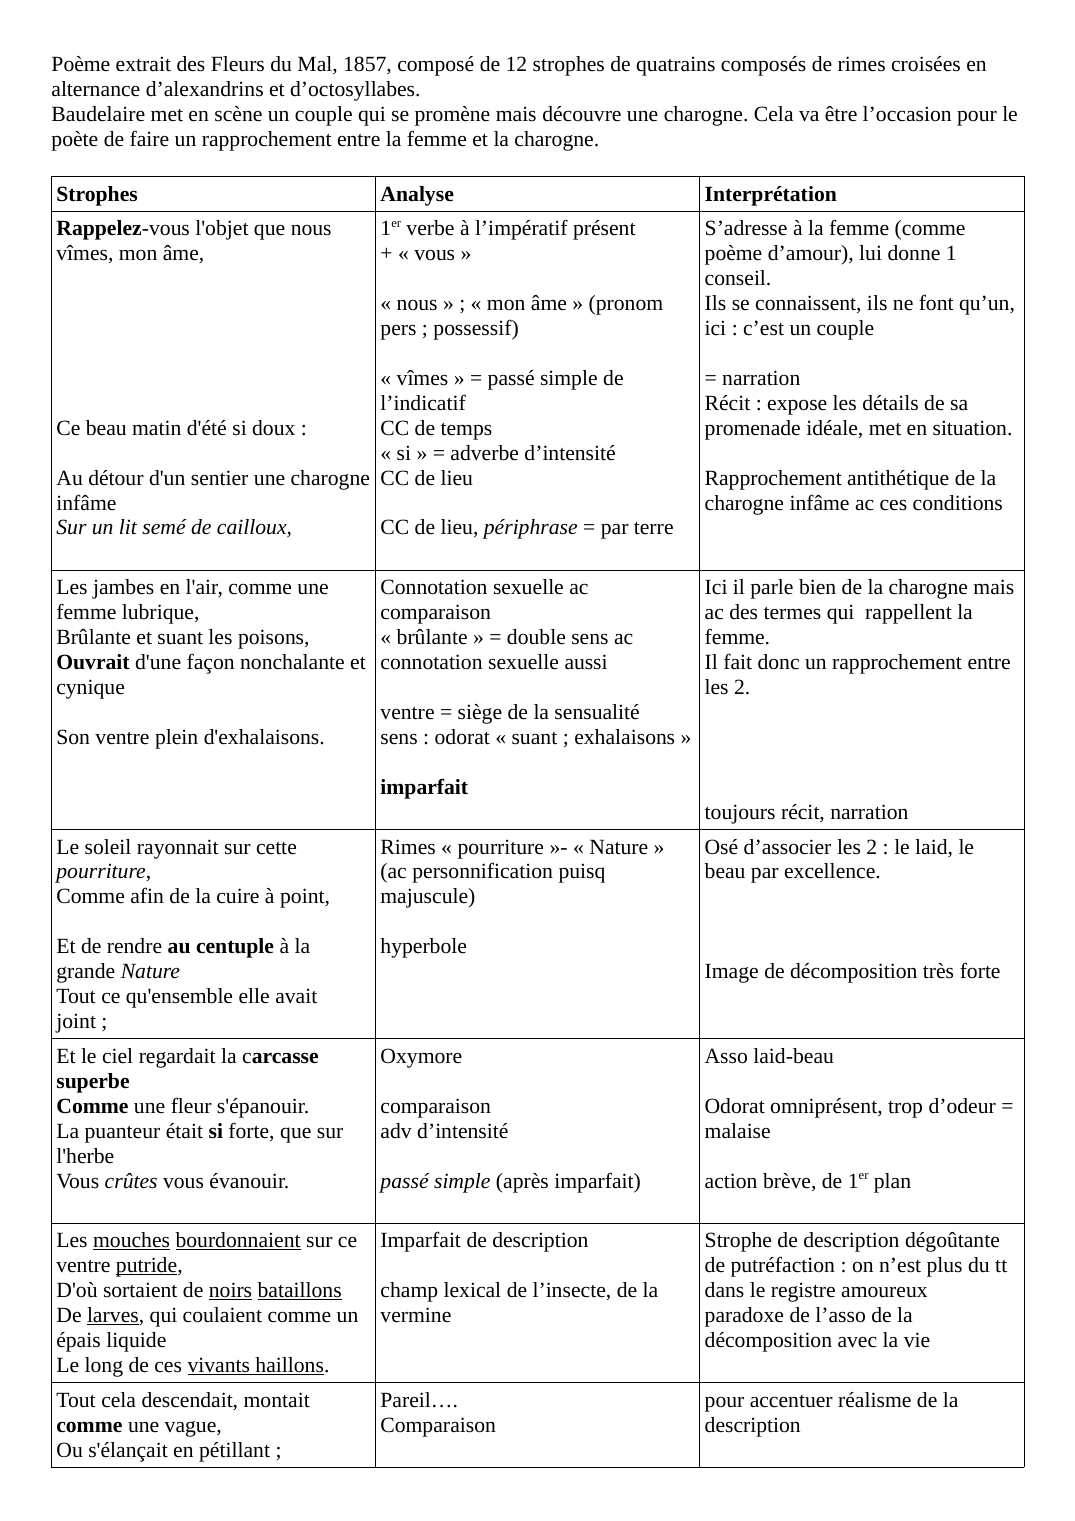 Prévisualisation du document Analyse Une Charogne, Baudelaire